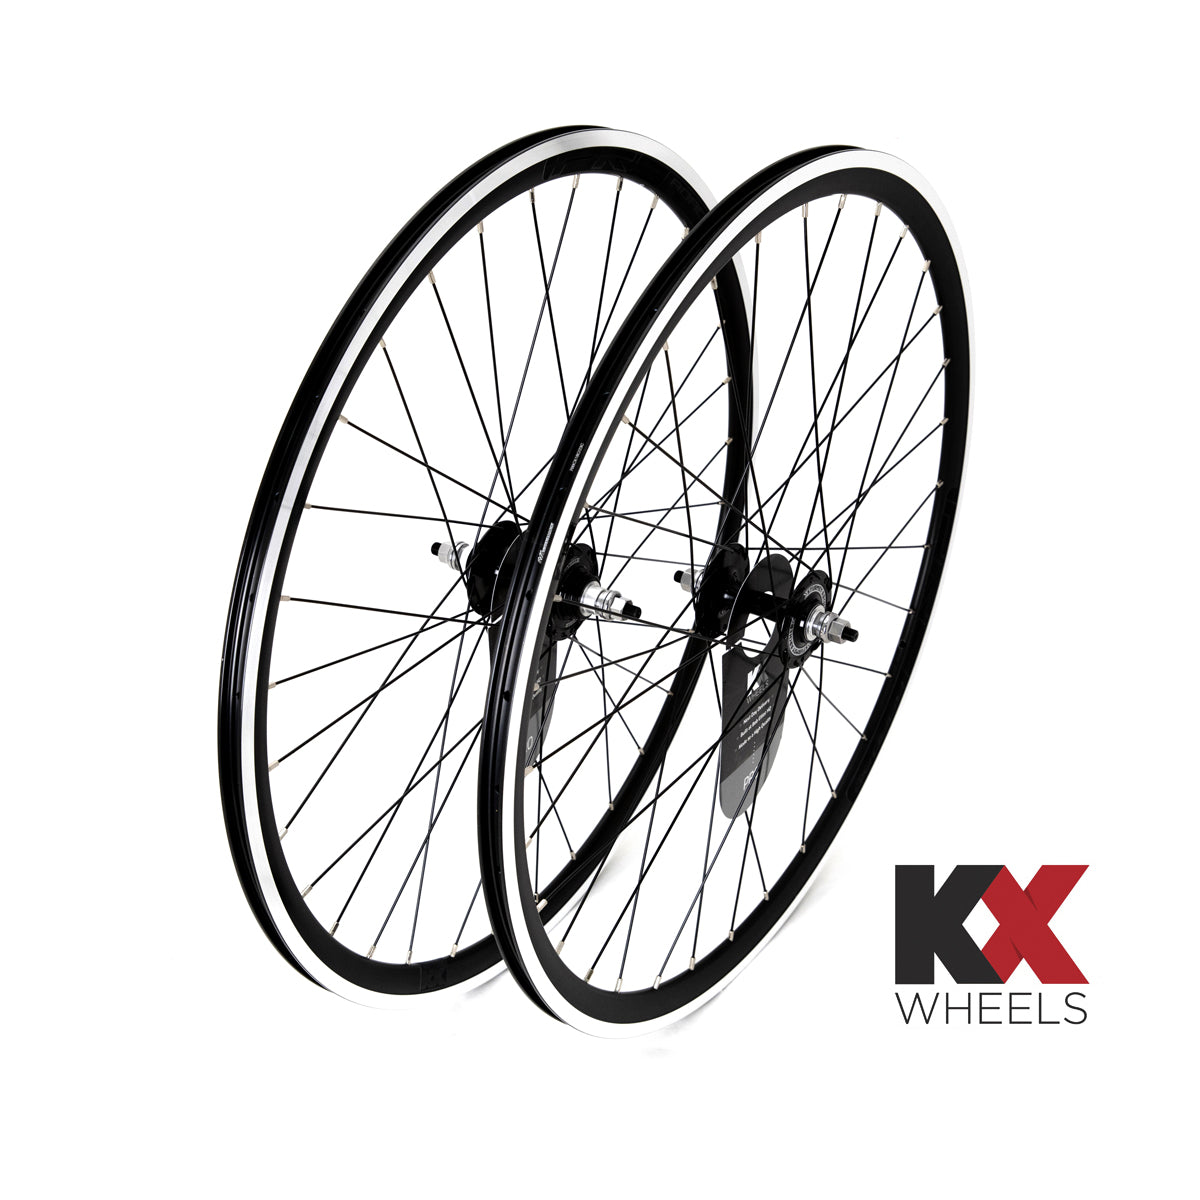 KX Wheels Pro FXD Flip Flop 700c Bike Wheel Set